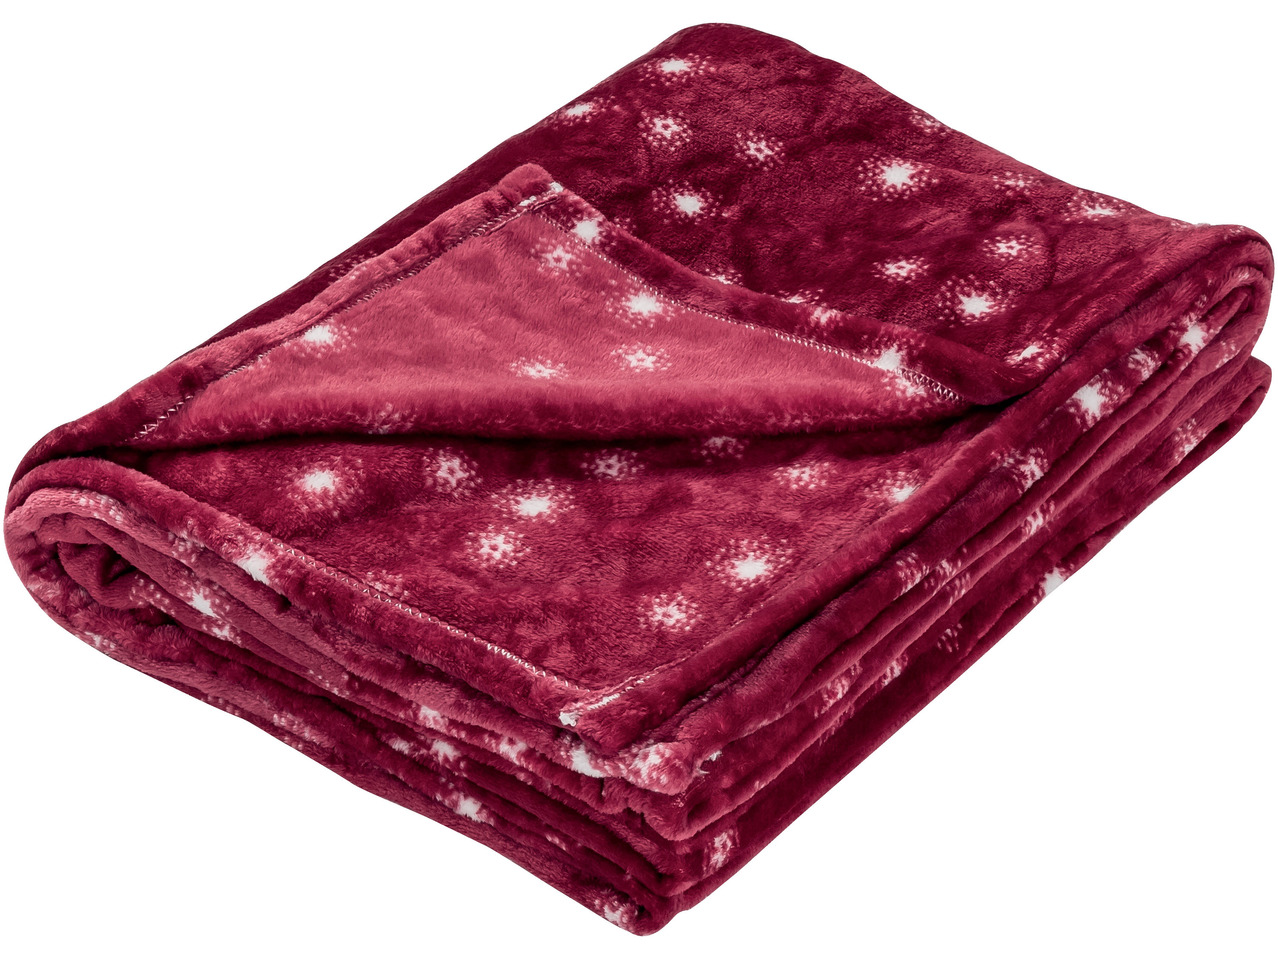 MERADISO Blanket